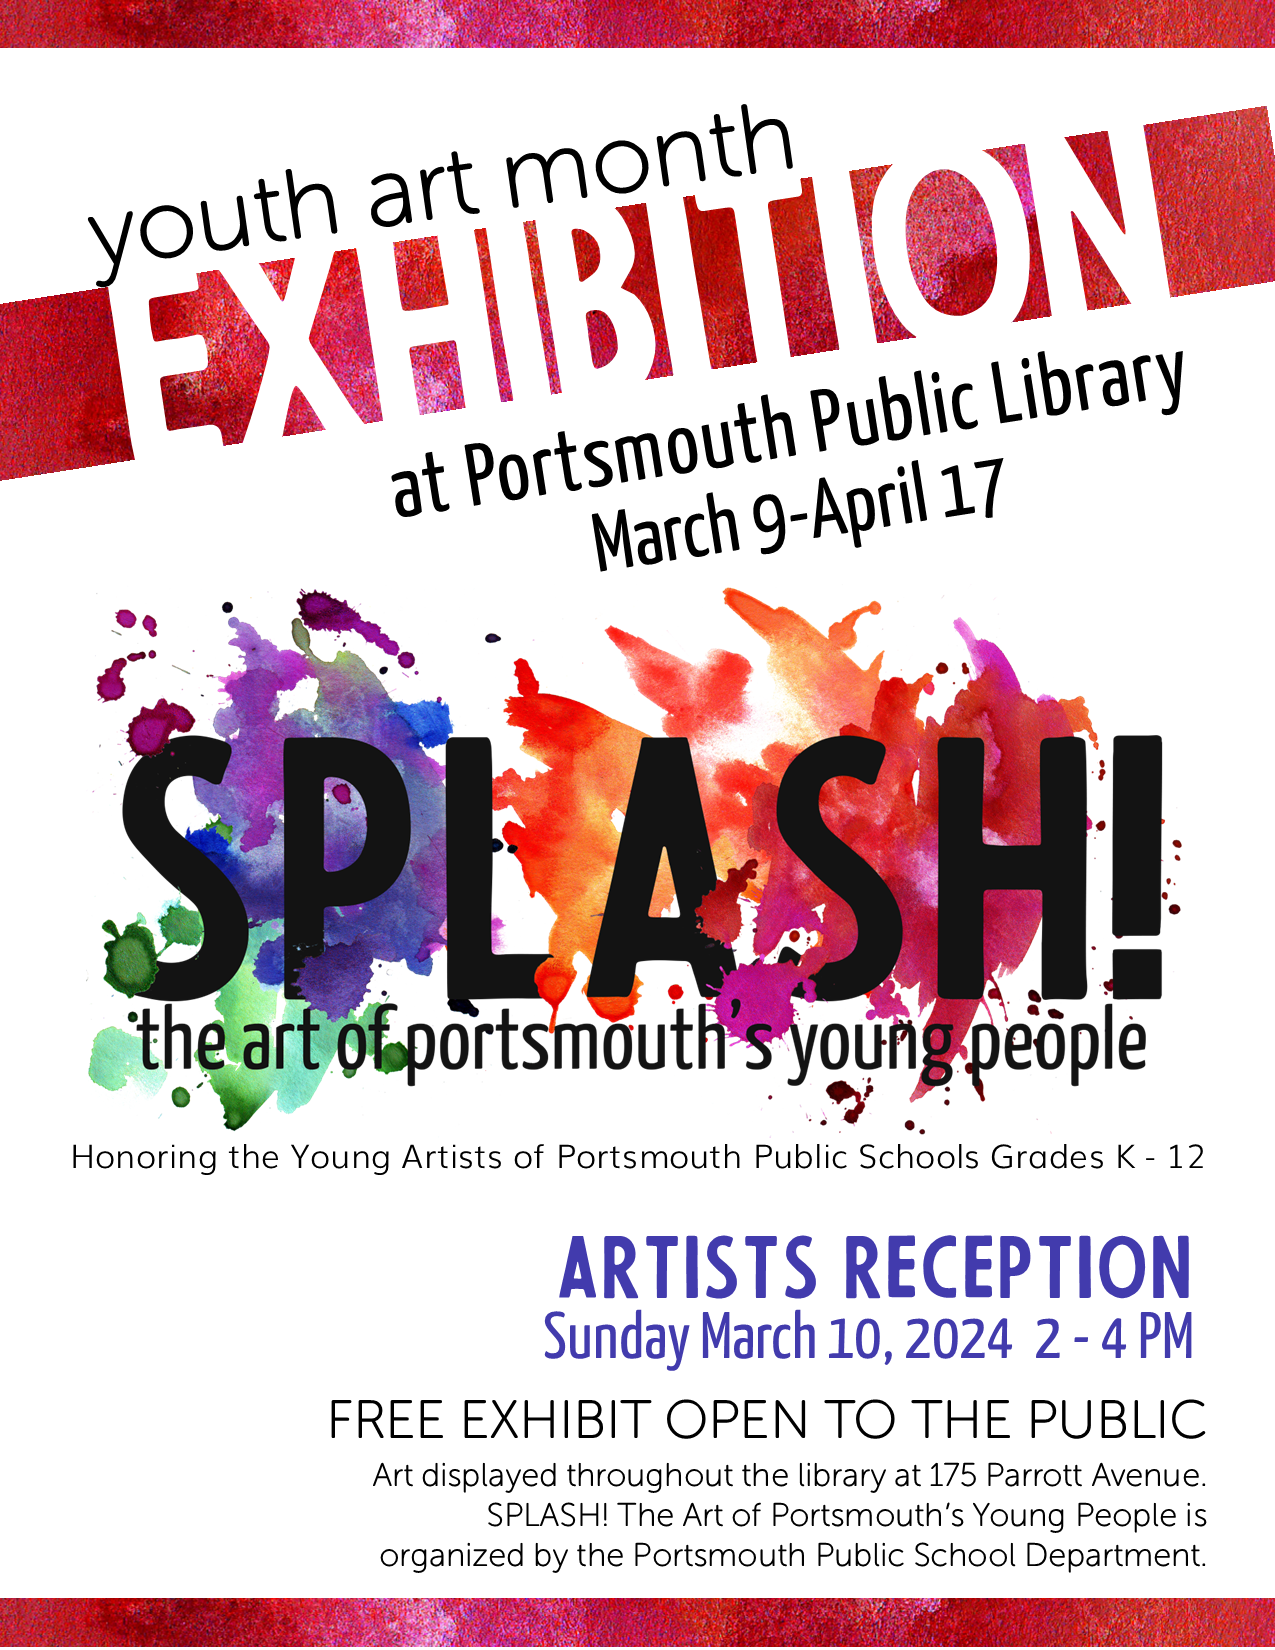 colorful splash behind SPLASH reception and exhibit Reception March 10 2-4 PM